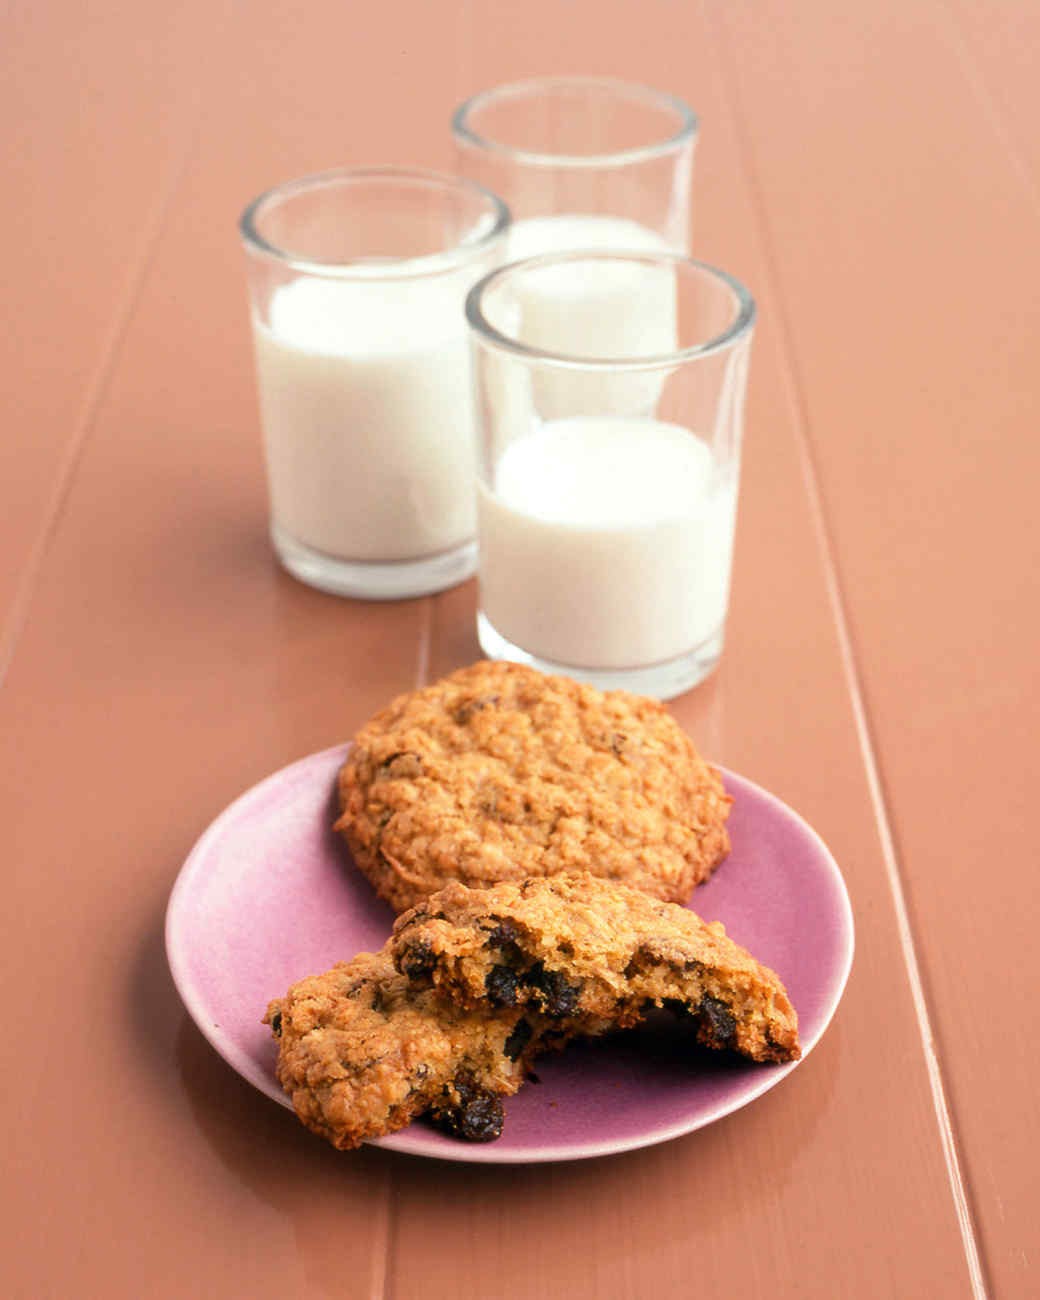 Martha Stewart Healthy Oatmeal Cookies
 Our Favorite Oatmeal Cookie Recipes